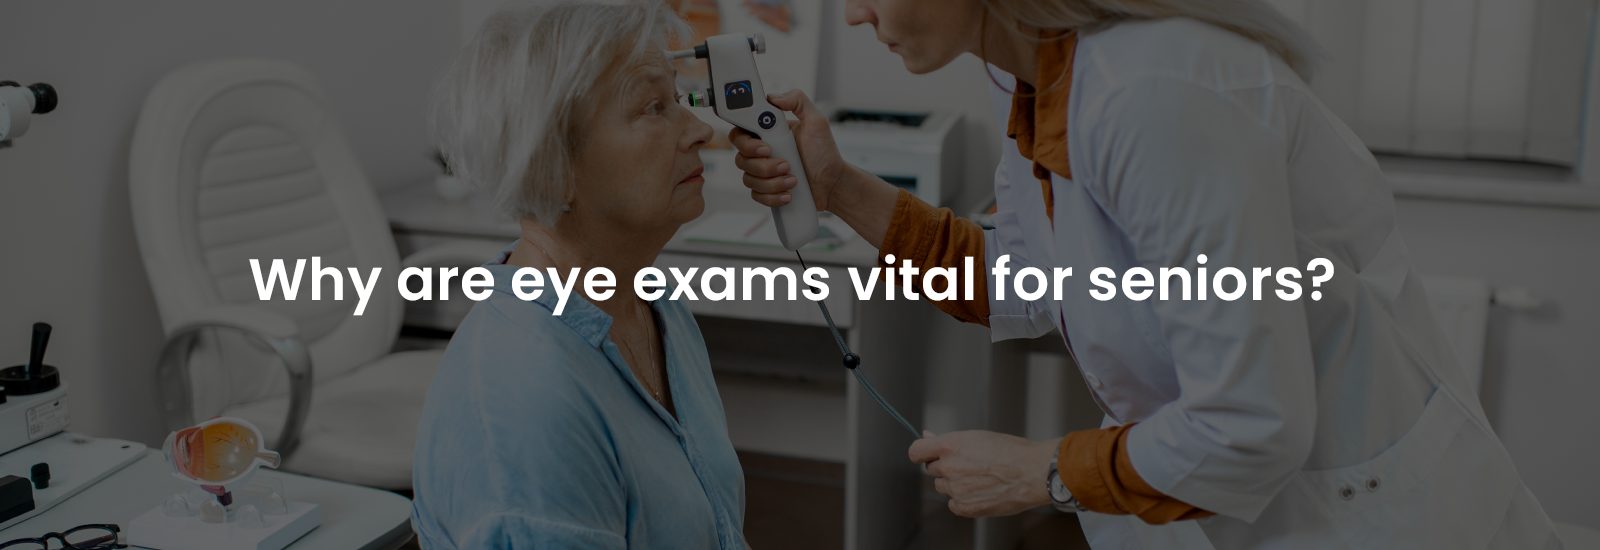 Why Are Eye Exams Vital for Seniors? | Banner Image